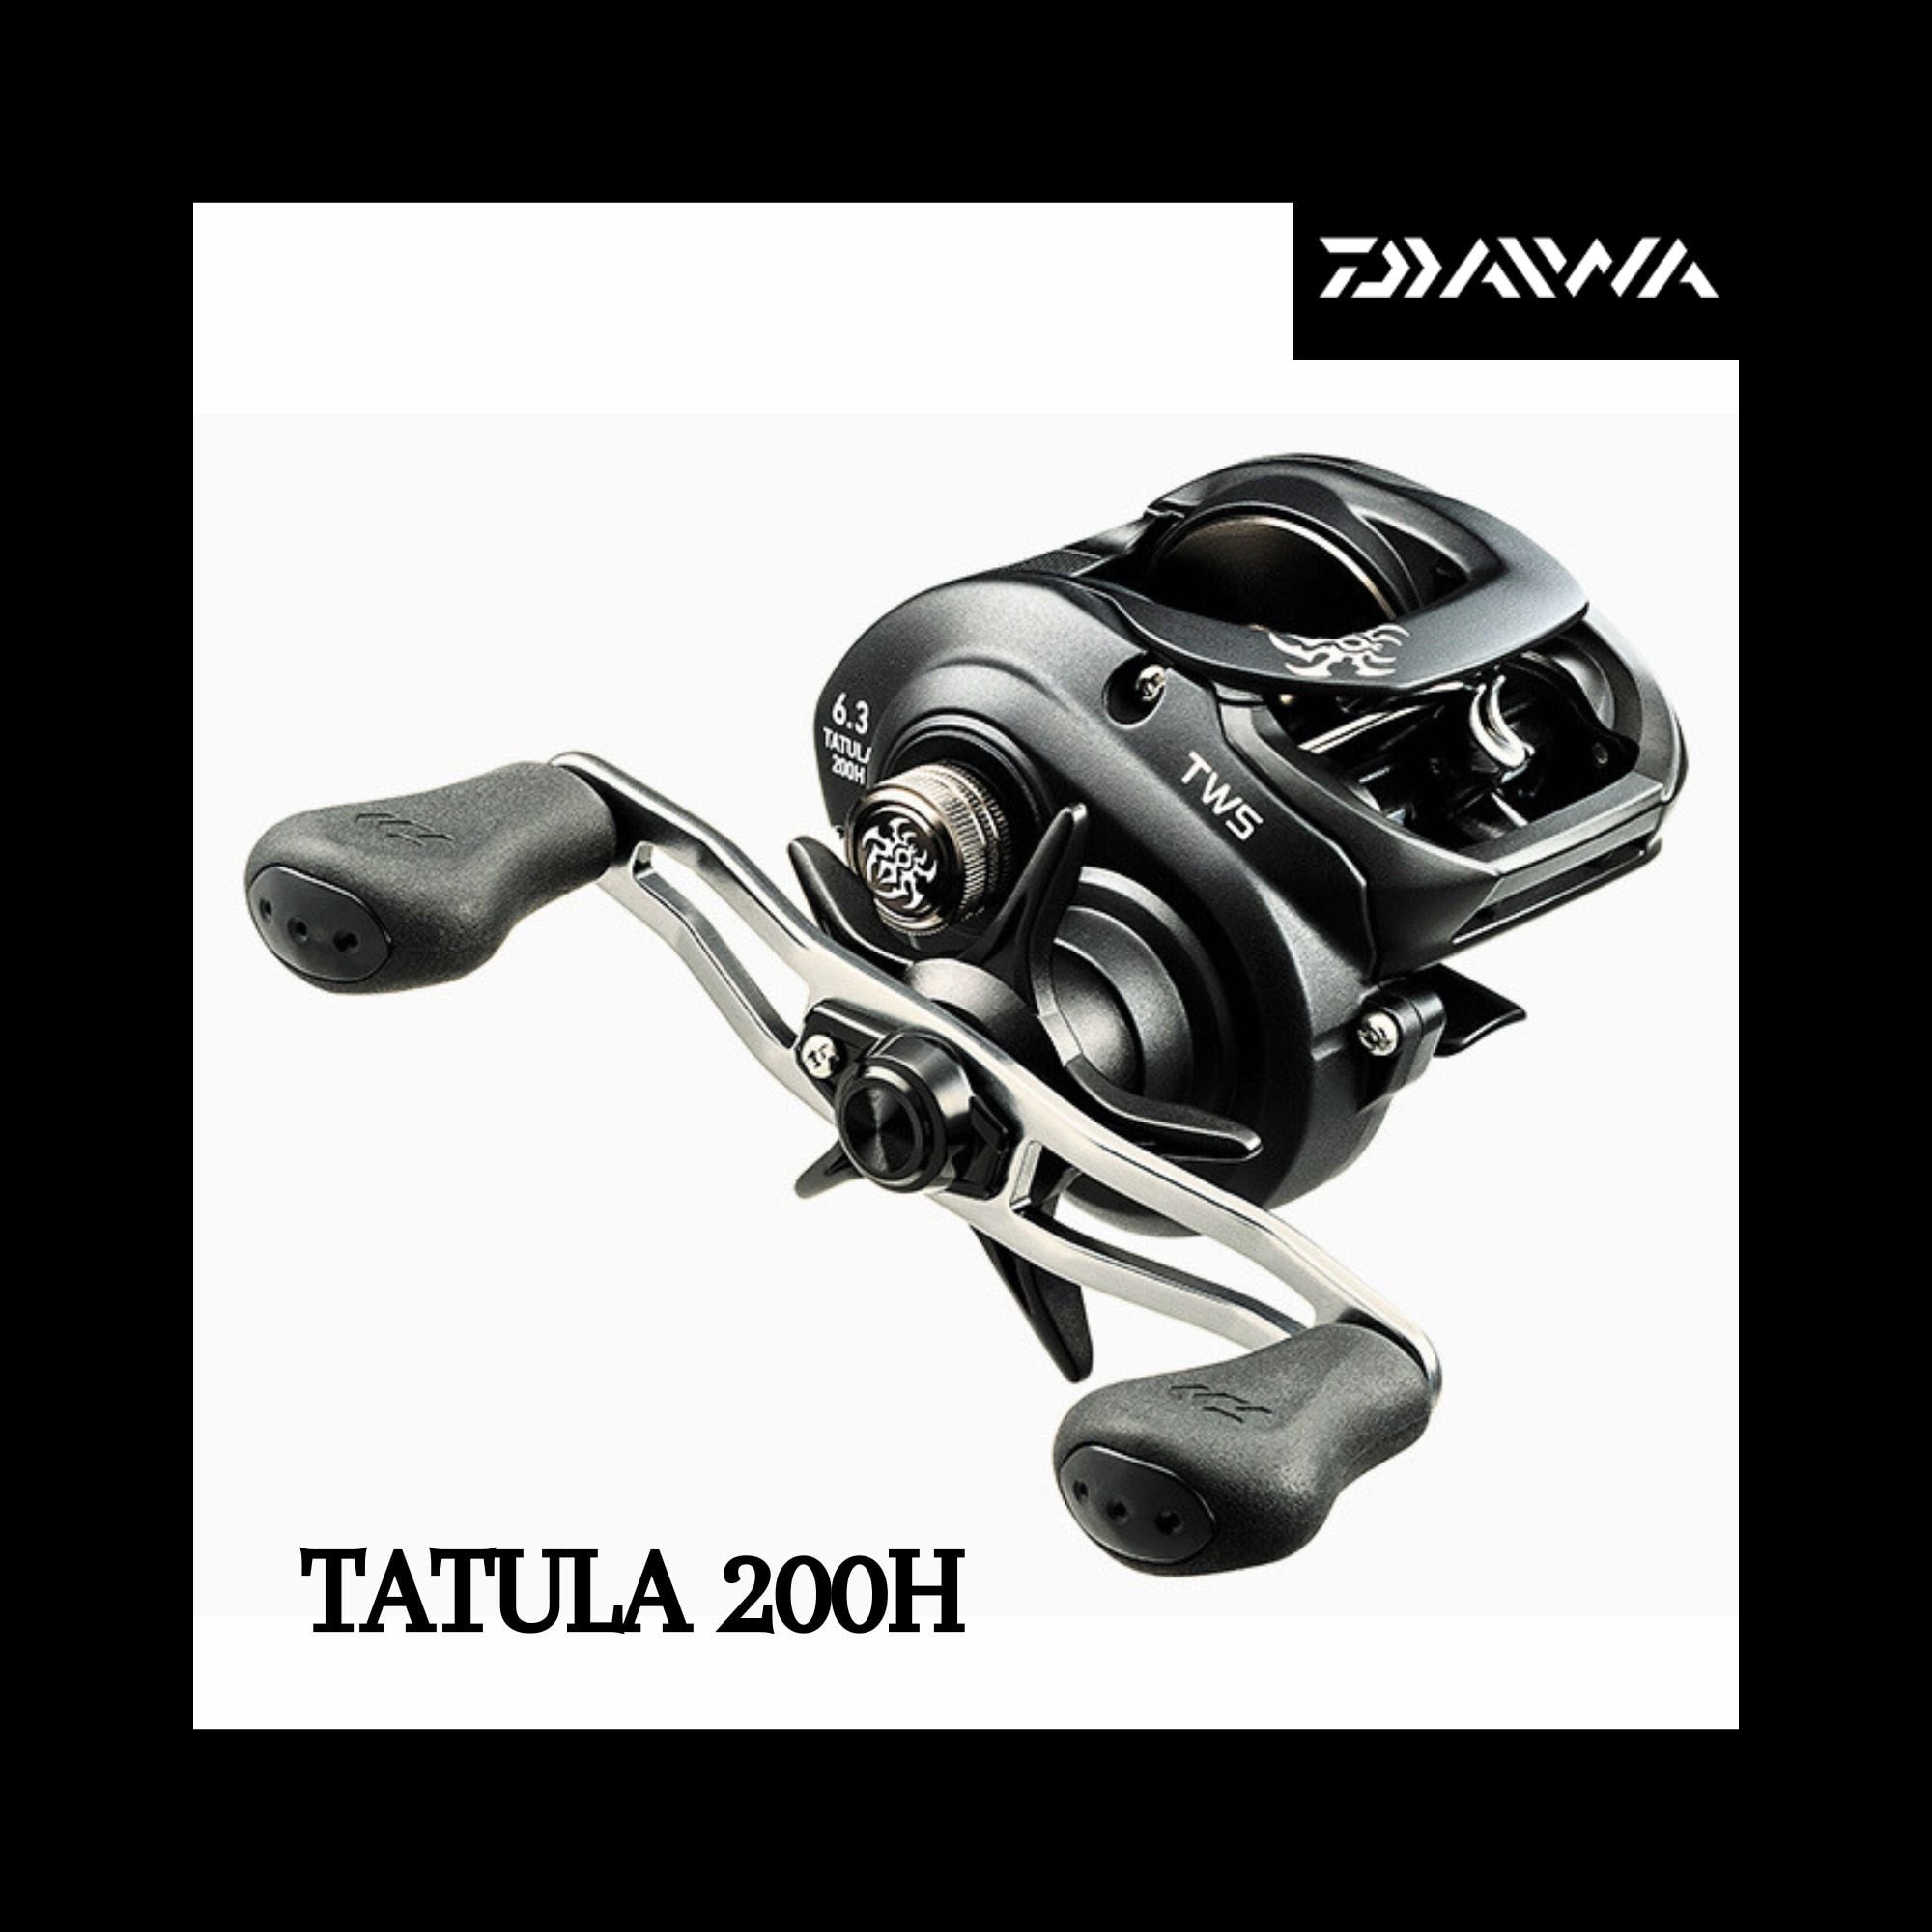 Daiwa Fishing Reels, Tatula 200H, Baitcasting Reels, Fishing Store